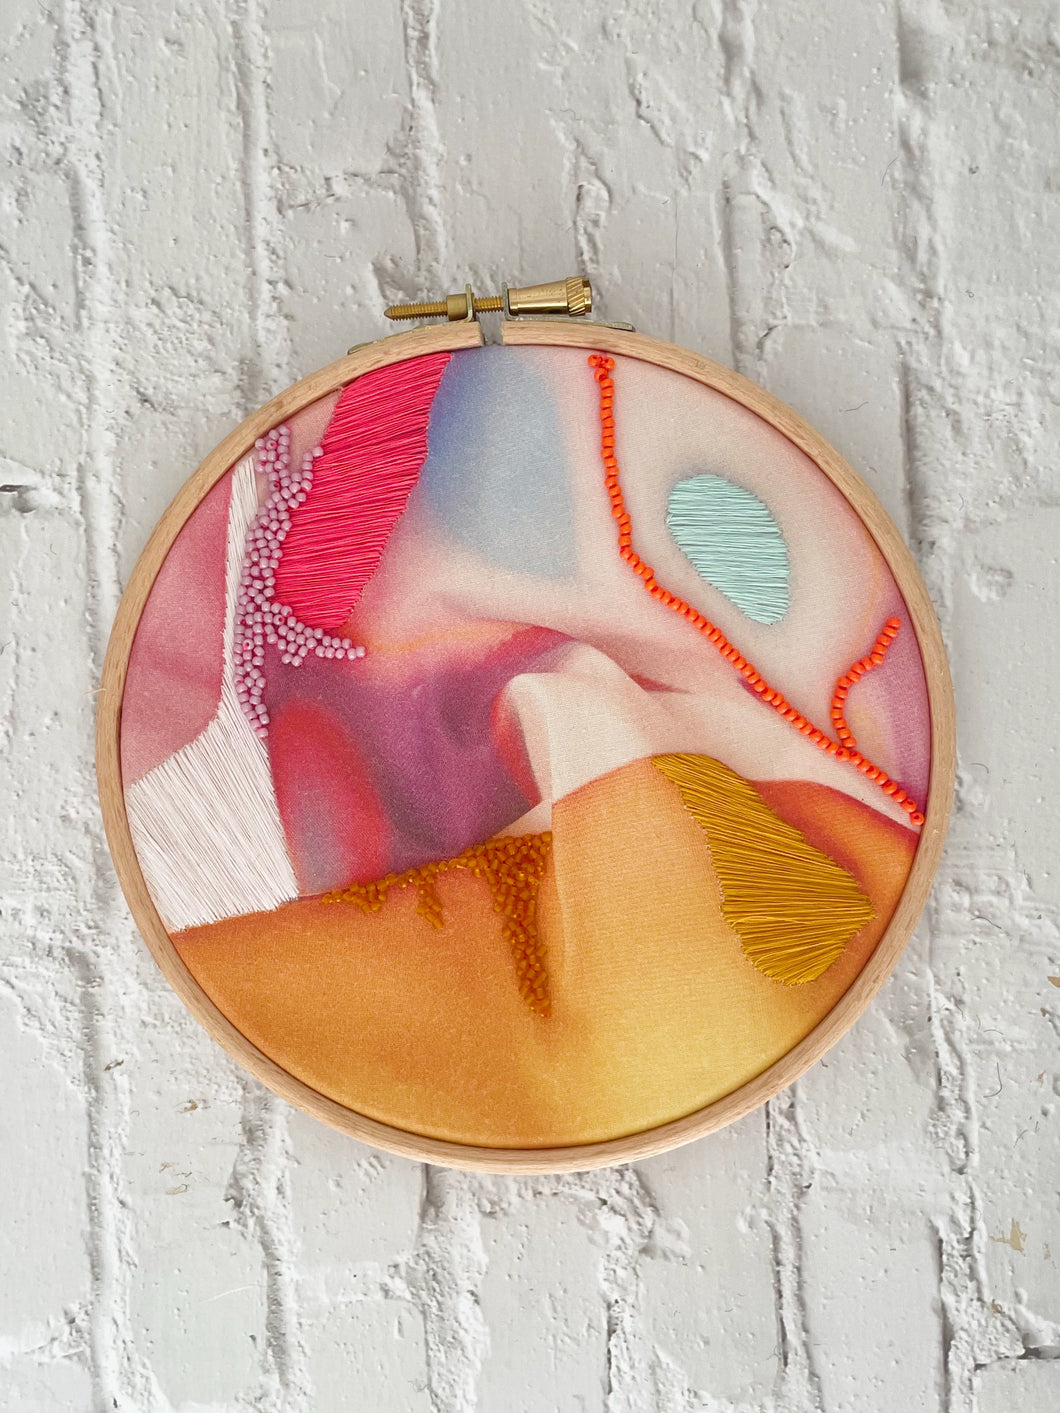 Sample abstract hoop